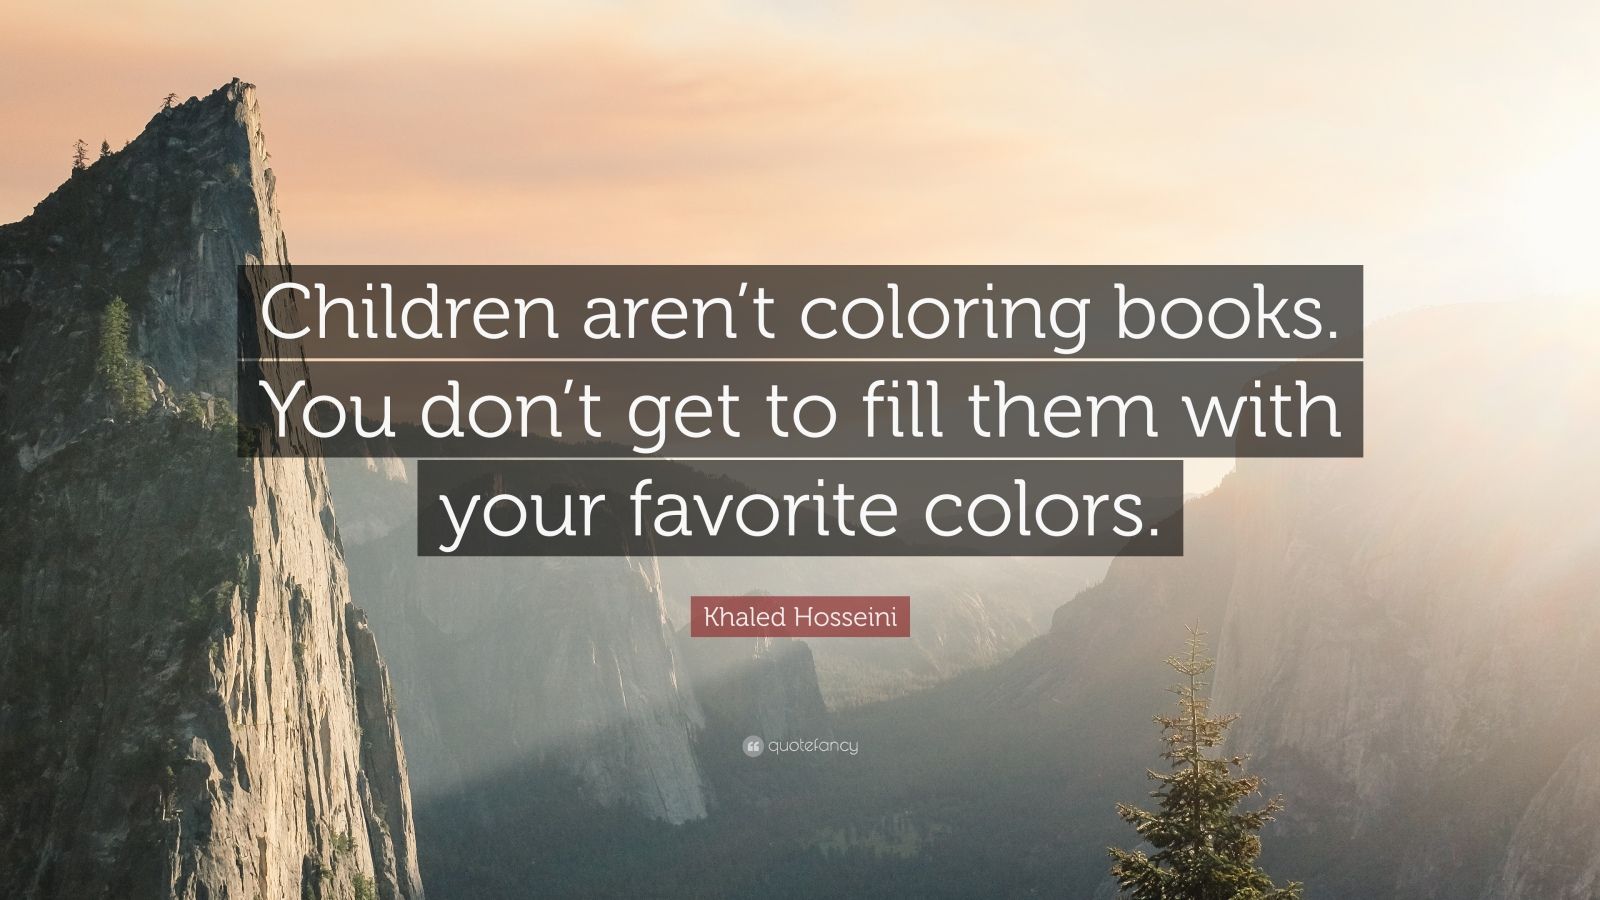 Khaled Hosseini Quote: “Children aren’t coloring books. You don’t get